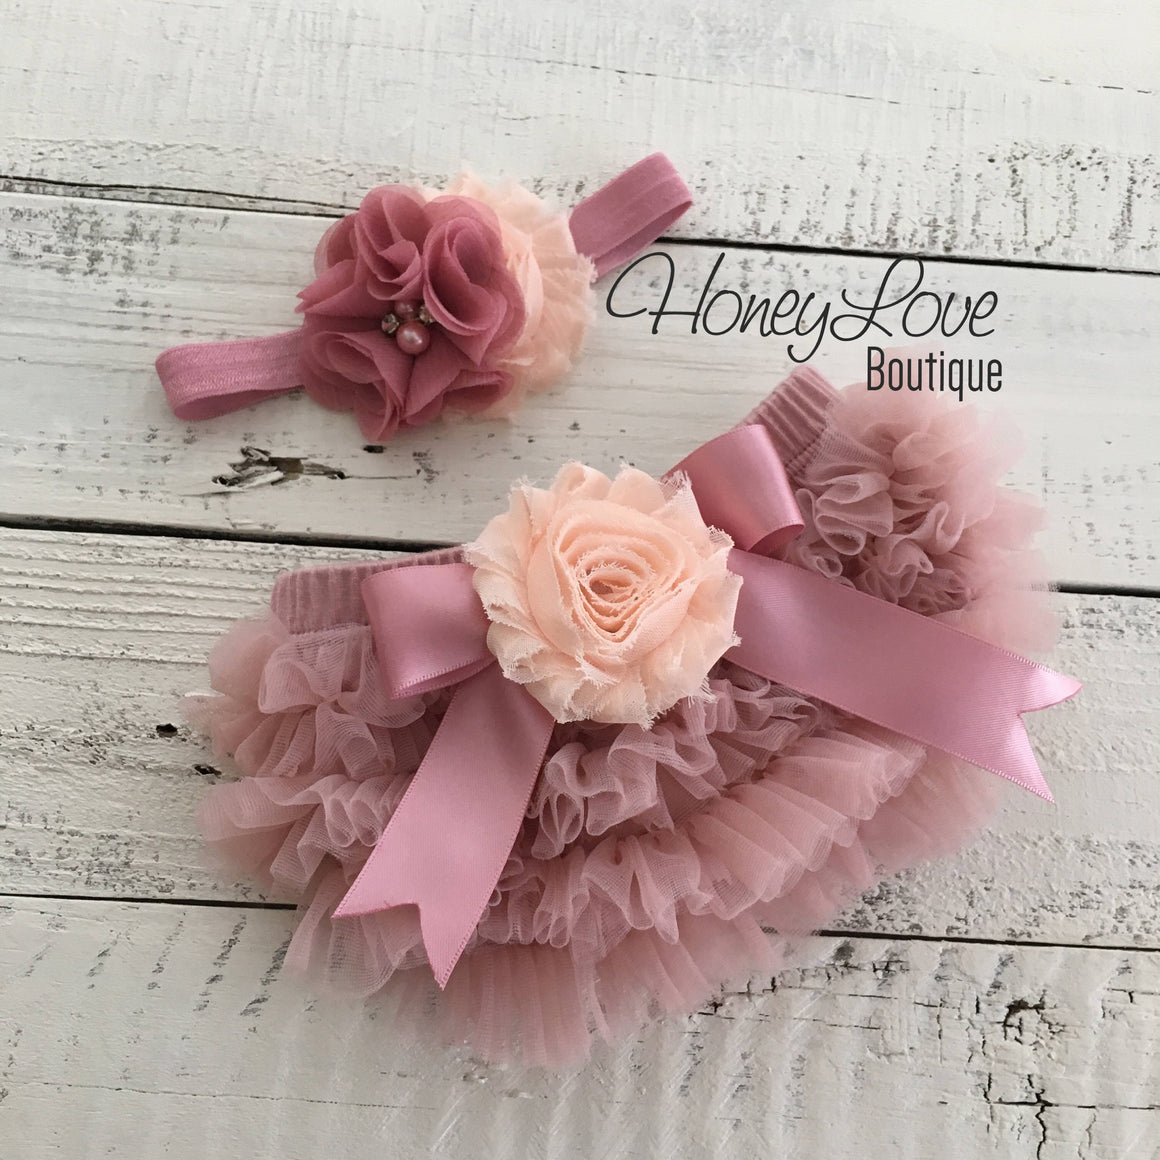 Vintage Pink ruffle bottom bloomers and vintage pink/peach flower headband - embellished flower - HoneyLoveBoutique